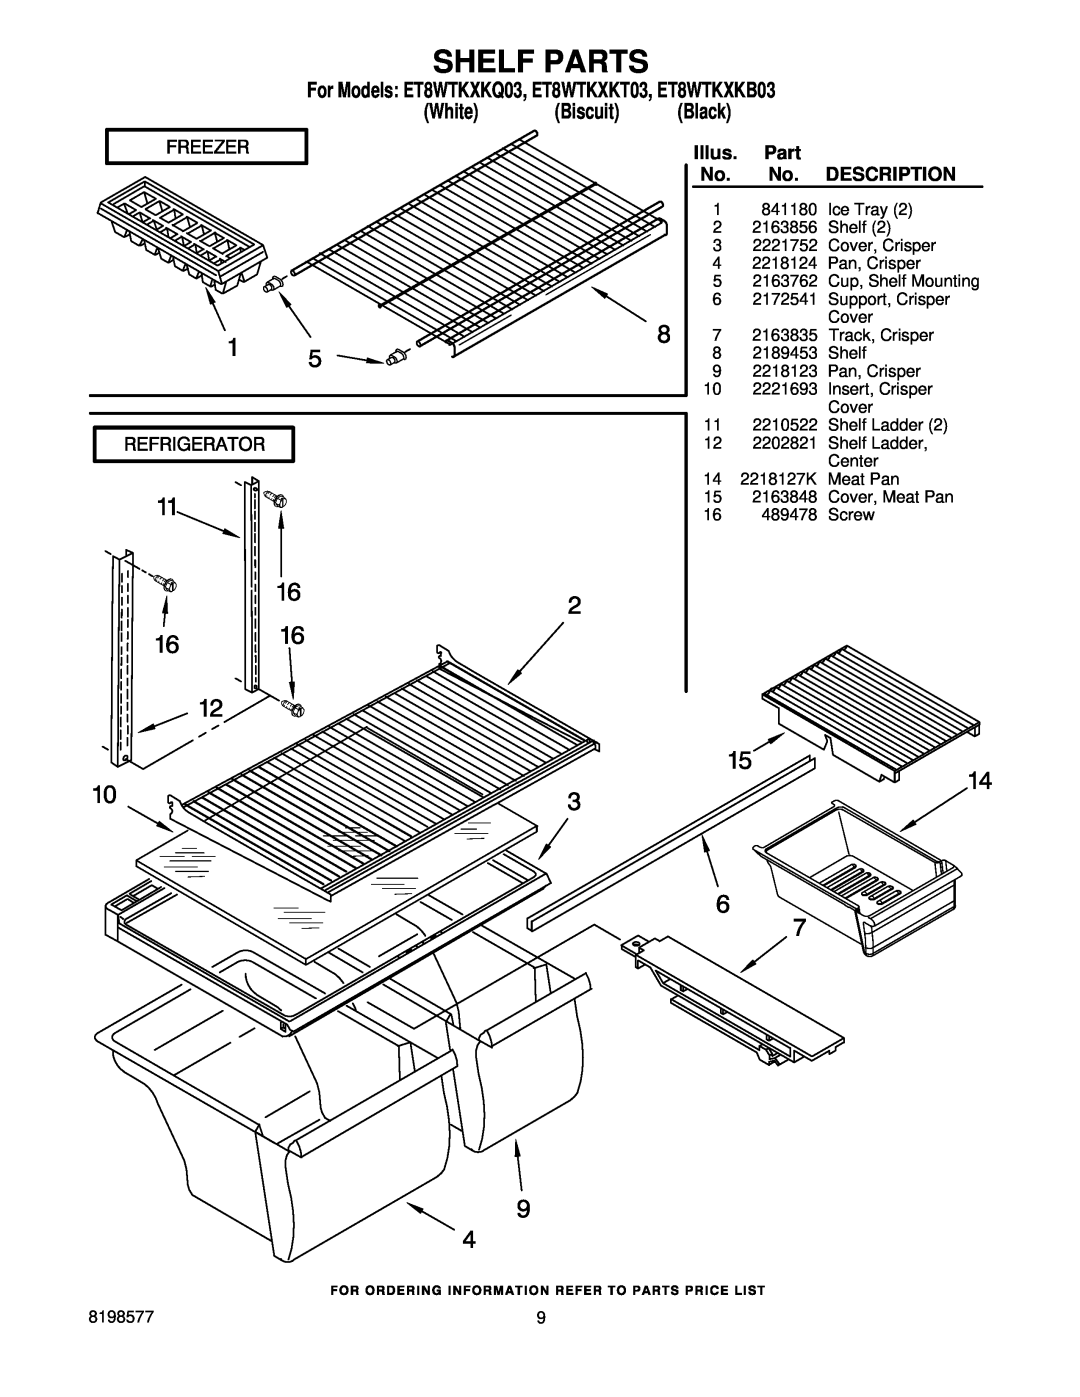 Whirlpool manual Shelf Parts, For Models ET8WTKXKQ03, ET8WTKXKT03, ET8WTKXKB03, White Biscuit Black, Illus, Description 